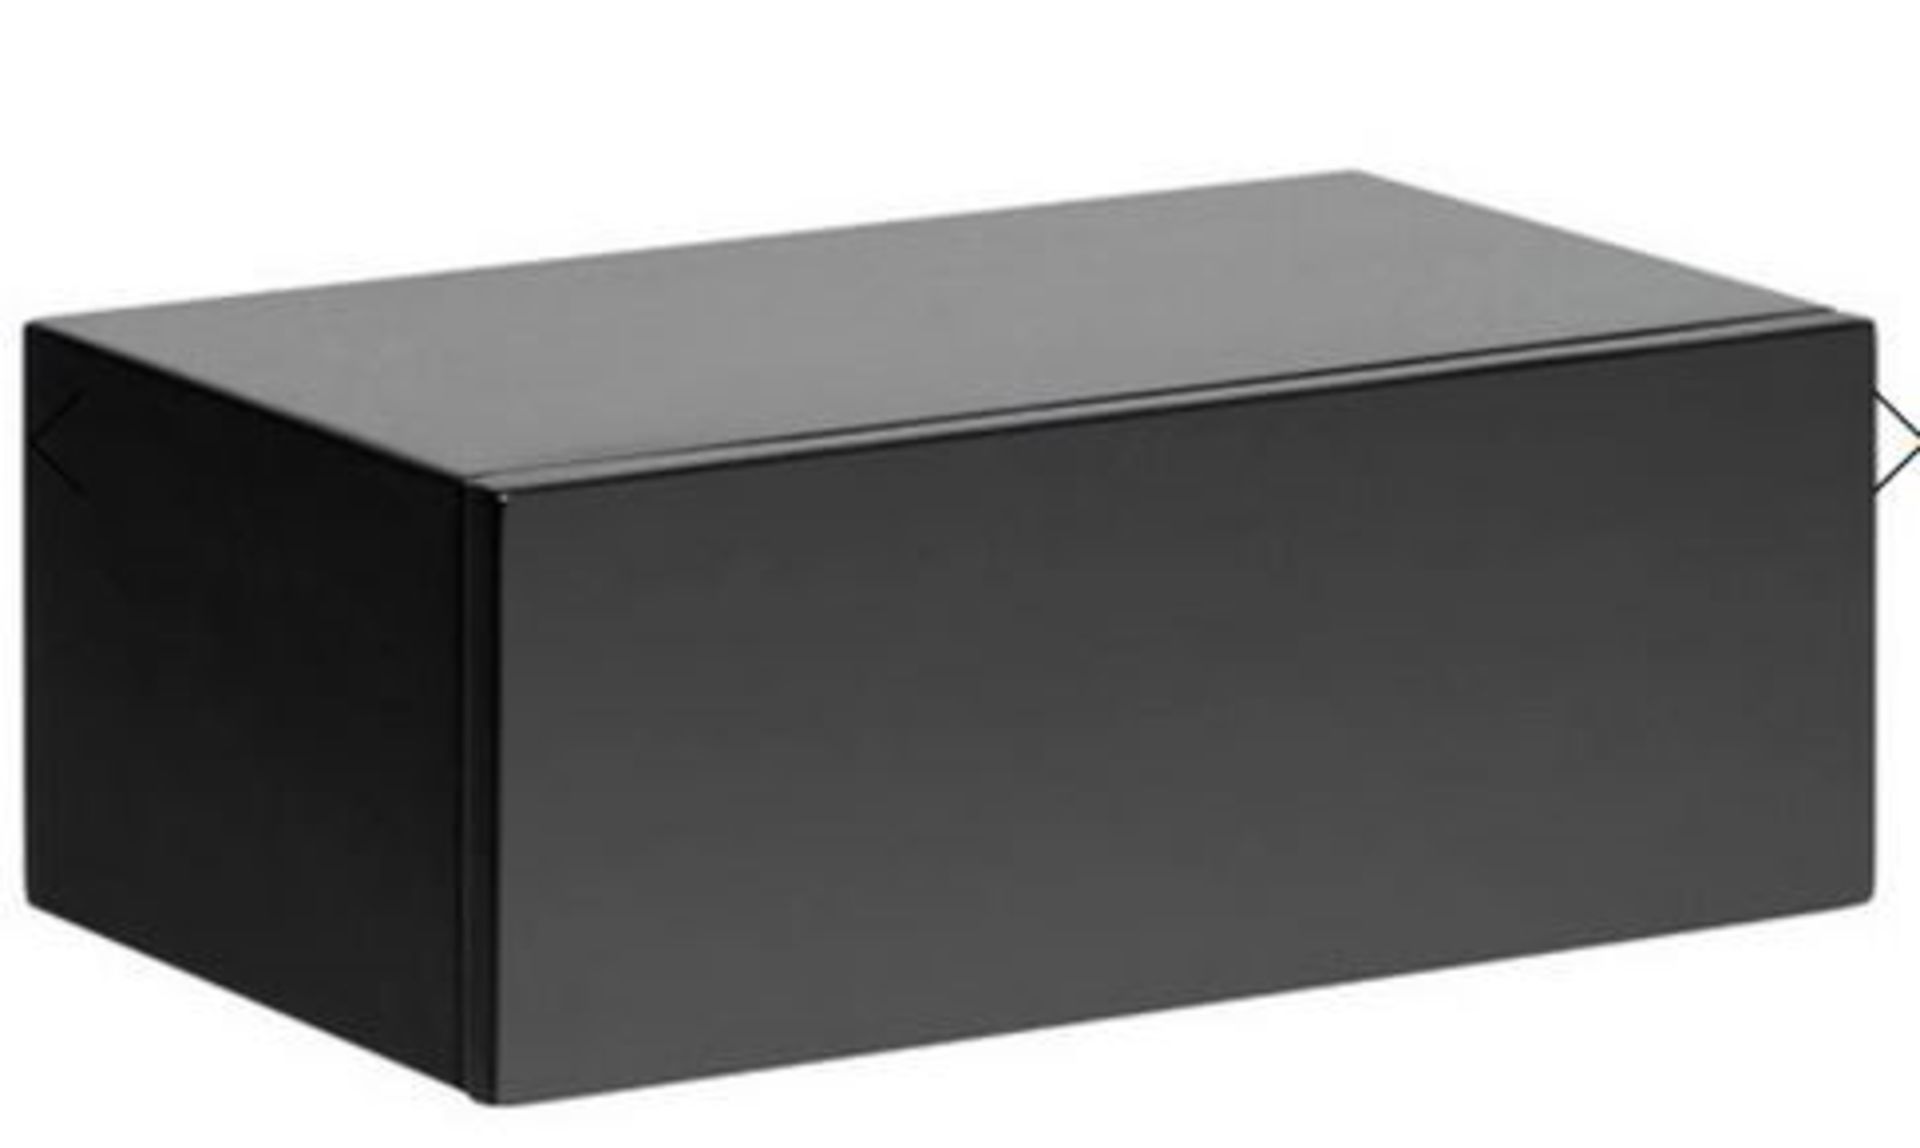 1 BOXED GRADE A DESIGNER AM.PM VESPER 1-DRAWER SHELF UNIT IN BLACK / RRP £65.00 (PUBLIC VIEWING